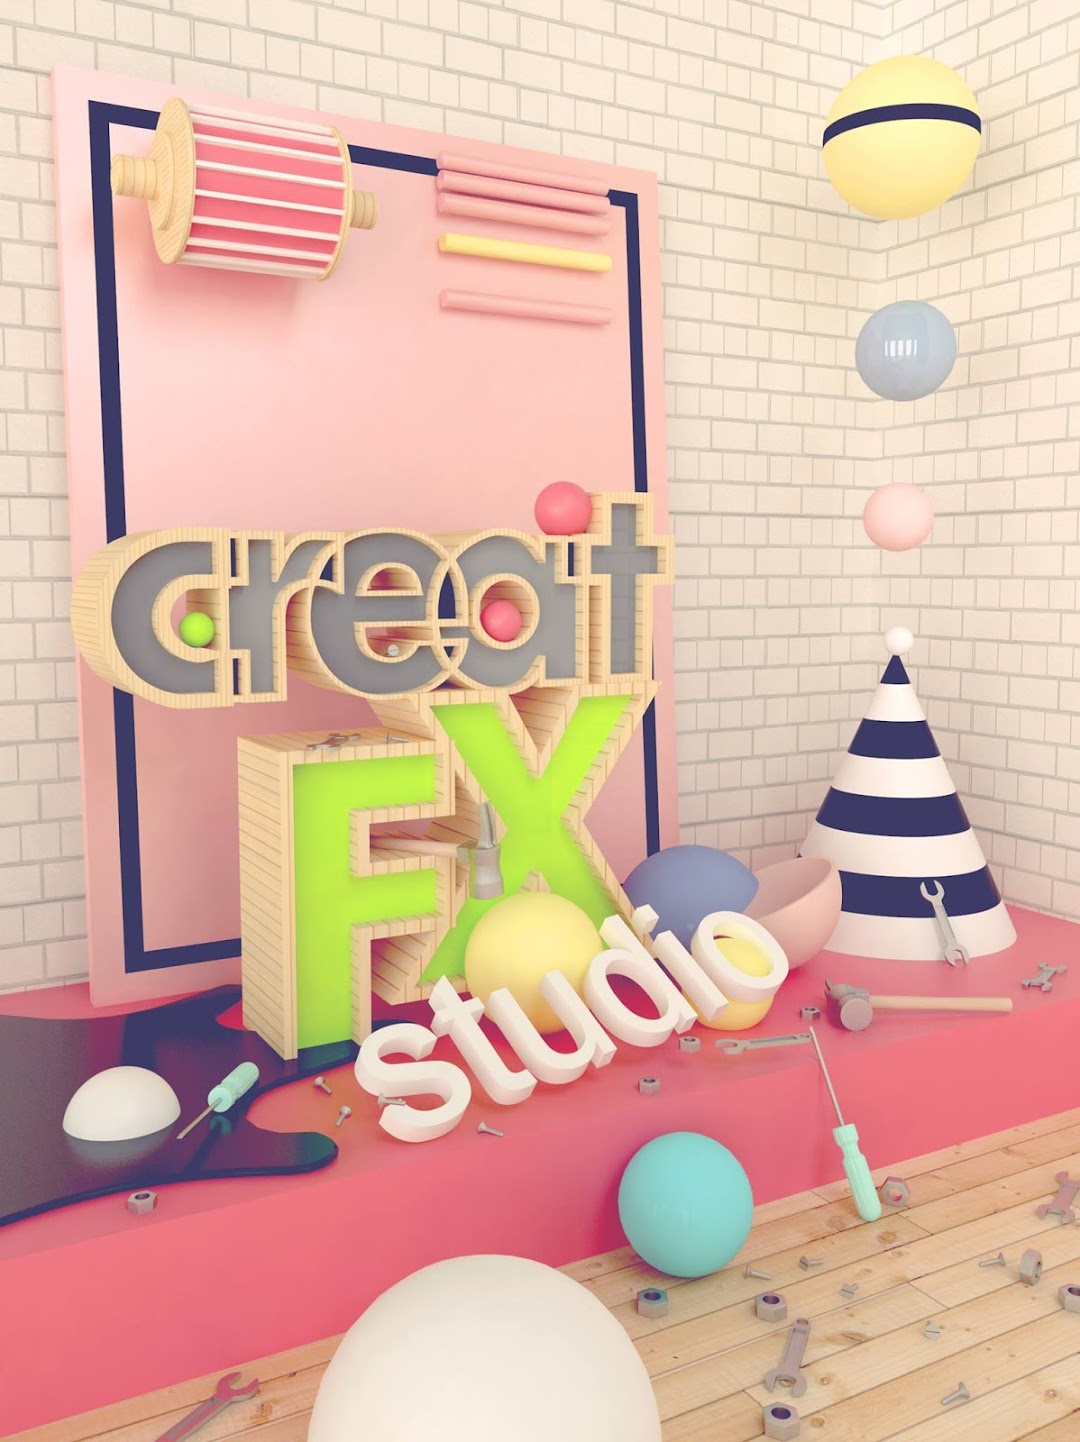 CREATFX STUDIO, Visual, effects, company, vfx, animation studio, motion graphics, vfx production, editing, 3d animation